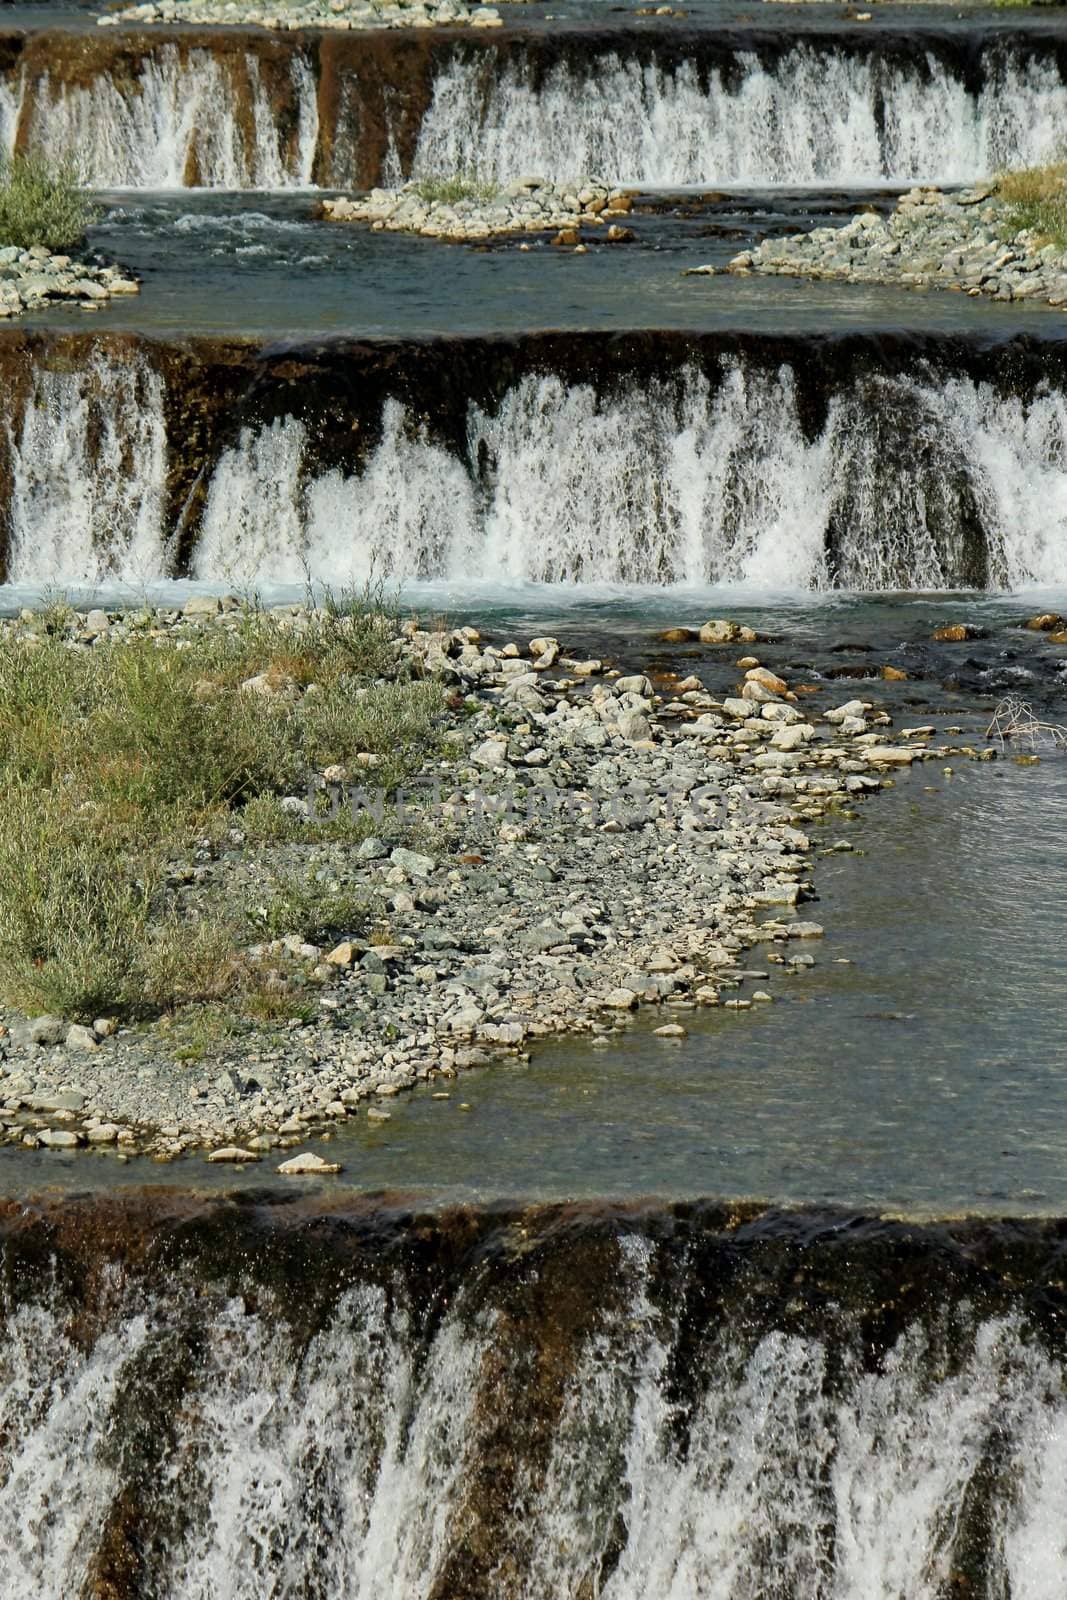 Spring water cascades on a mountain river